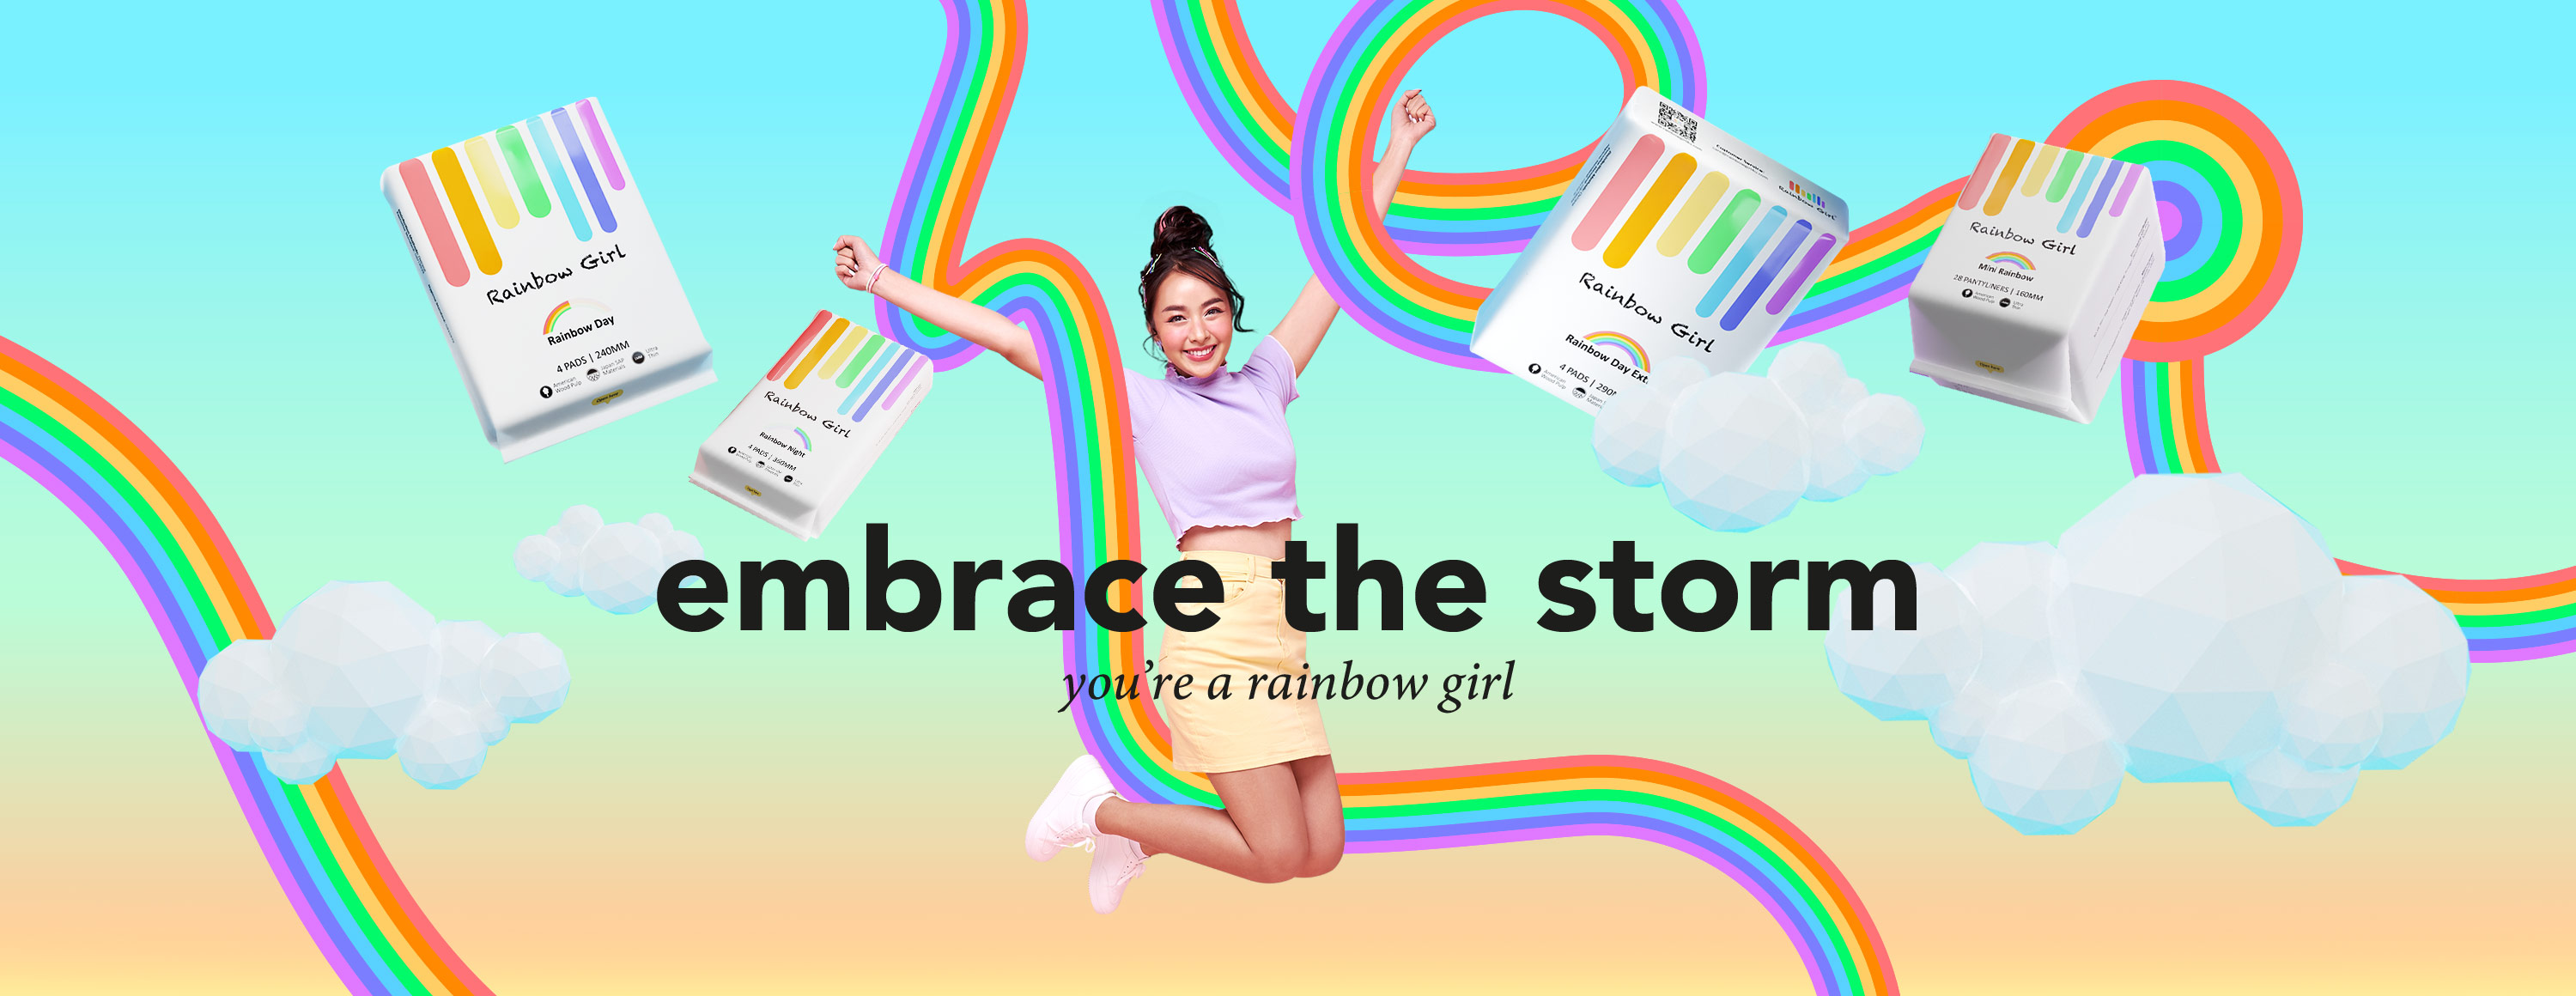 Rainbow Girl - embrace the storm